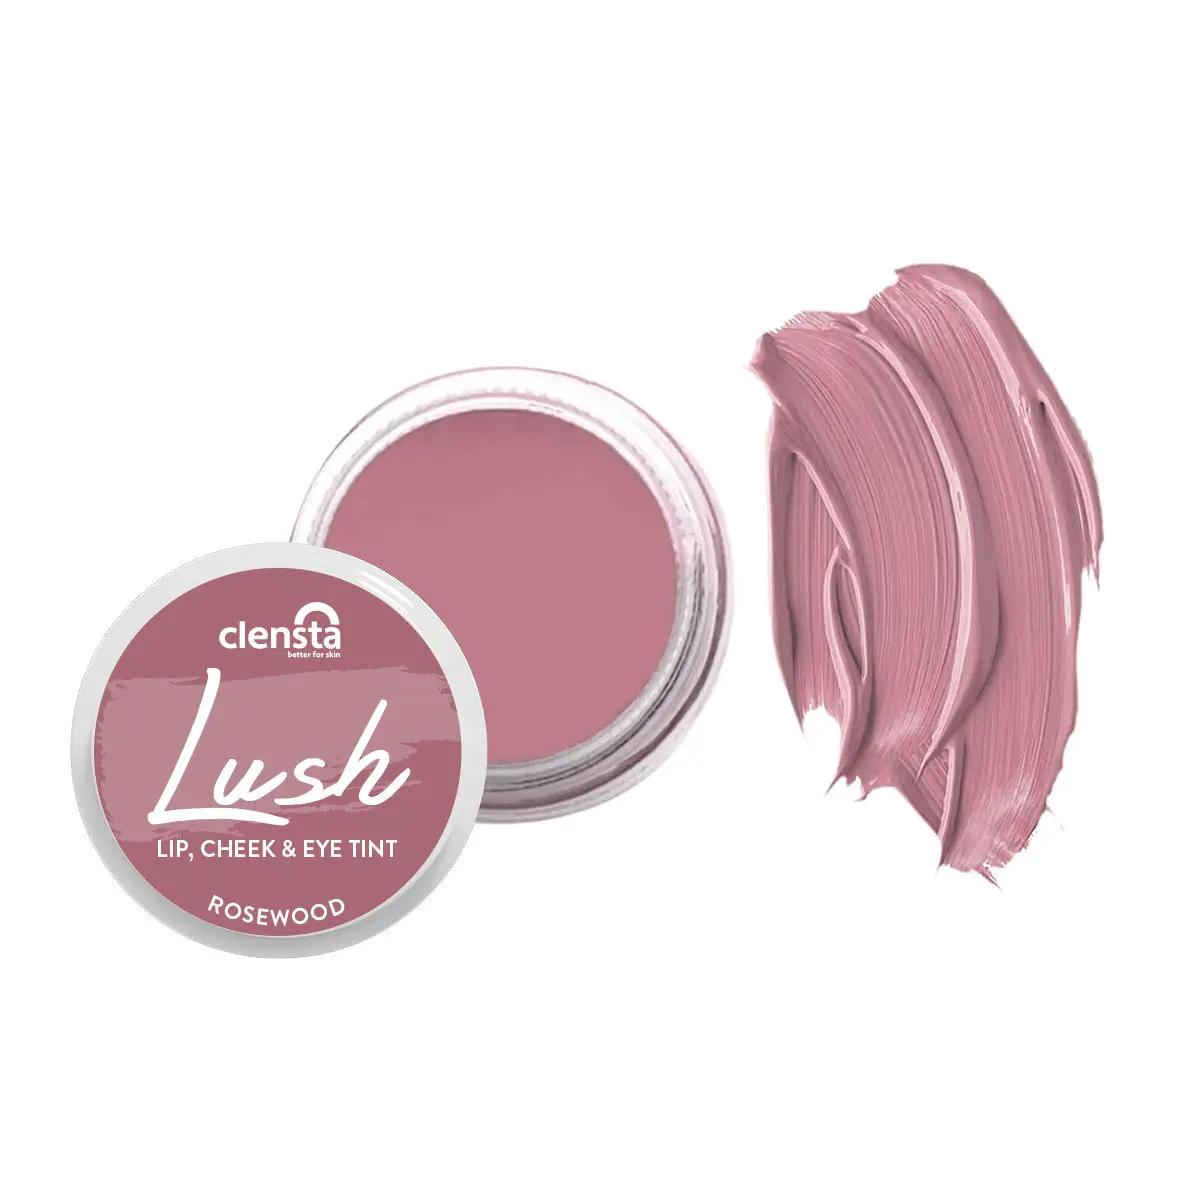 Clensta Lush Blush lip and cheek tint - Rosewood| 5 gm| With Red Aloe Vera and Jojoba Oil| Better Lip Tone and Soft Texture| Cheeks Blush